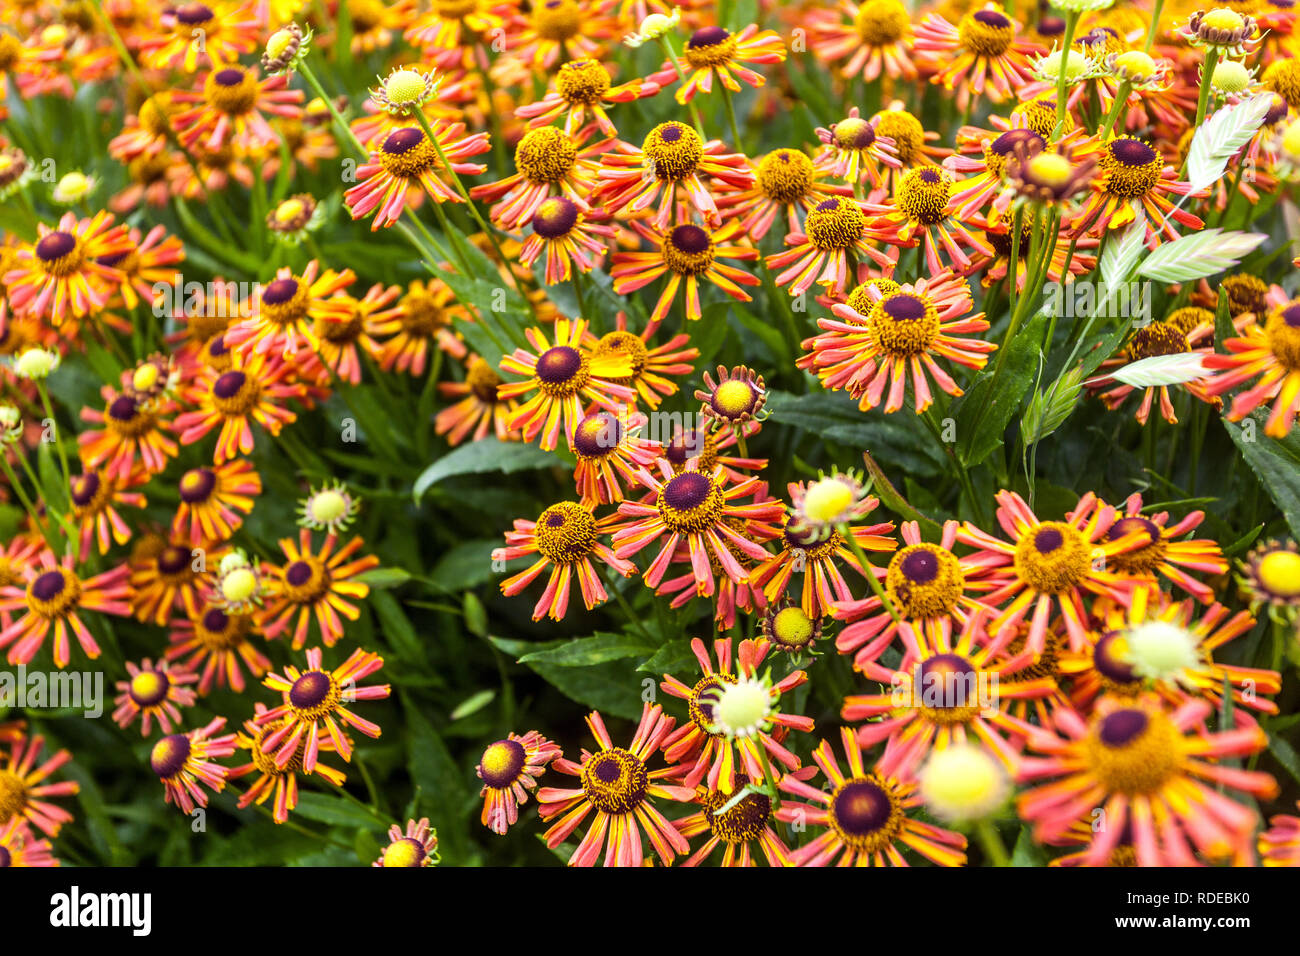 Perennial garden flower border plant Helenium Orange Sneezeweed Helen's Flower Stock Photo